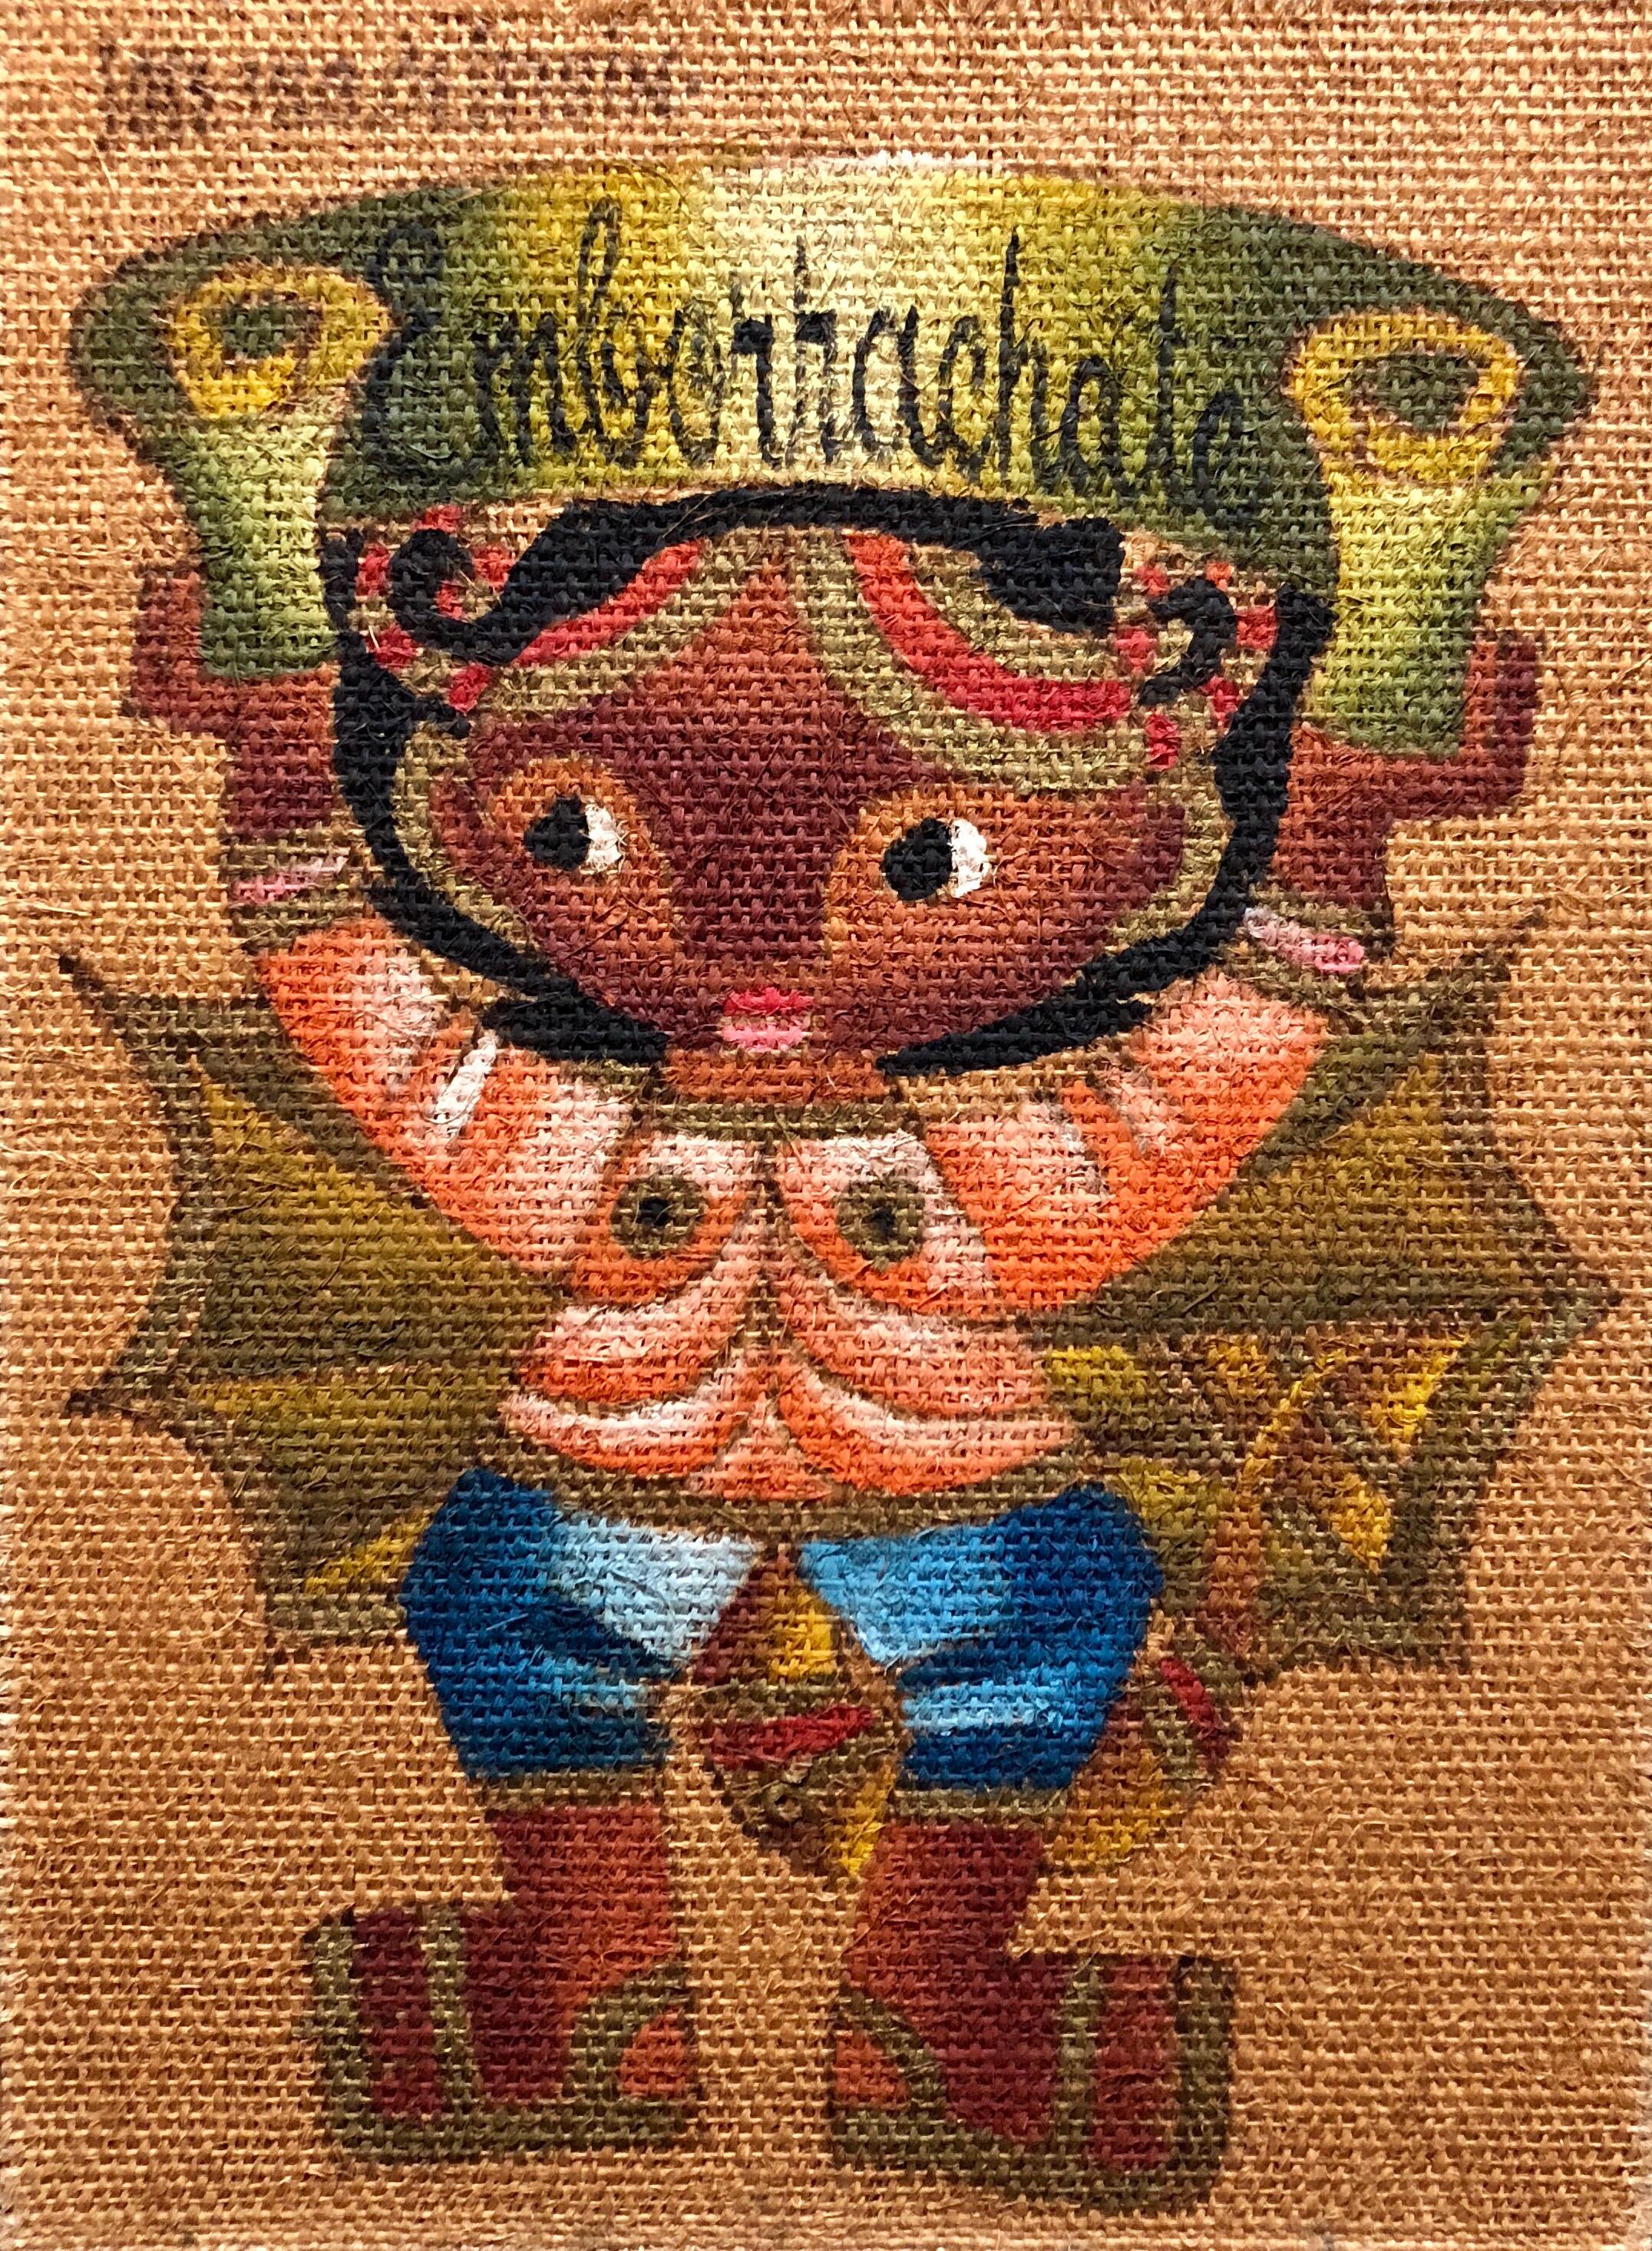 Folk Art Mexican Girl "Emborrachate" Oil Painting on Burlap